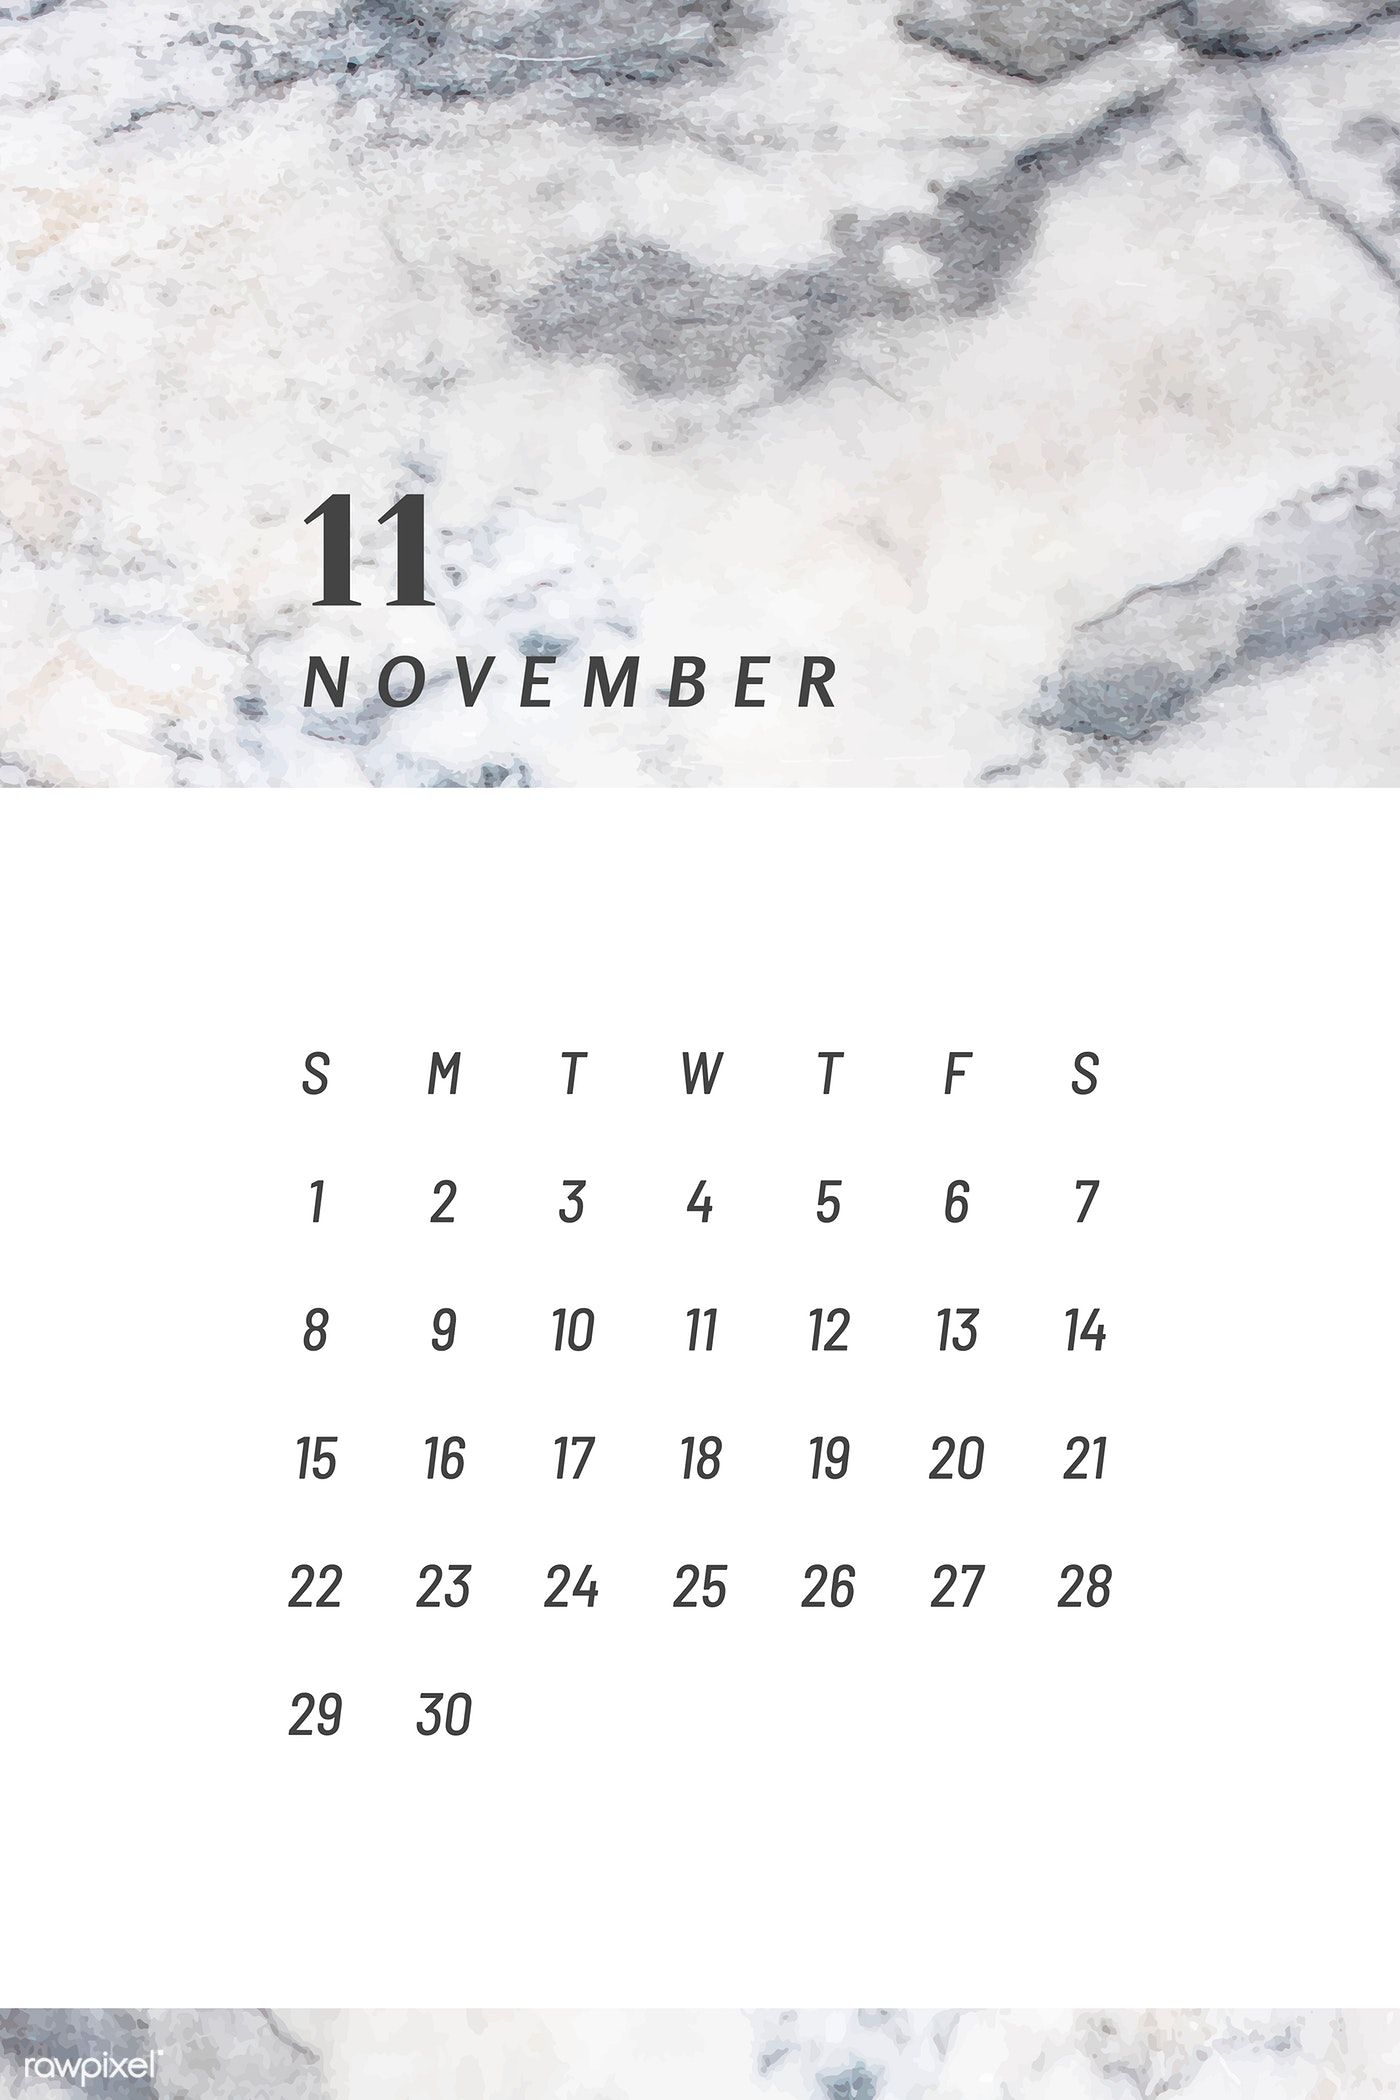 Download premium vector of Black and white November calendar 2020 vector. November calendar, Calendar wallpaper, Calendar 2020